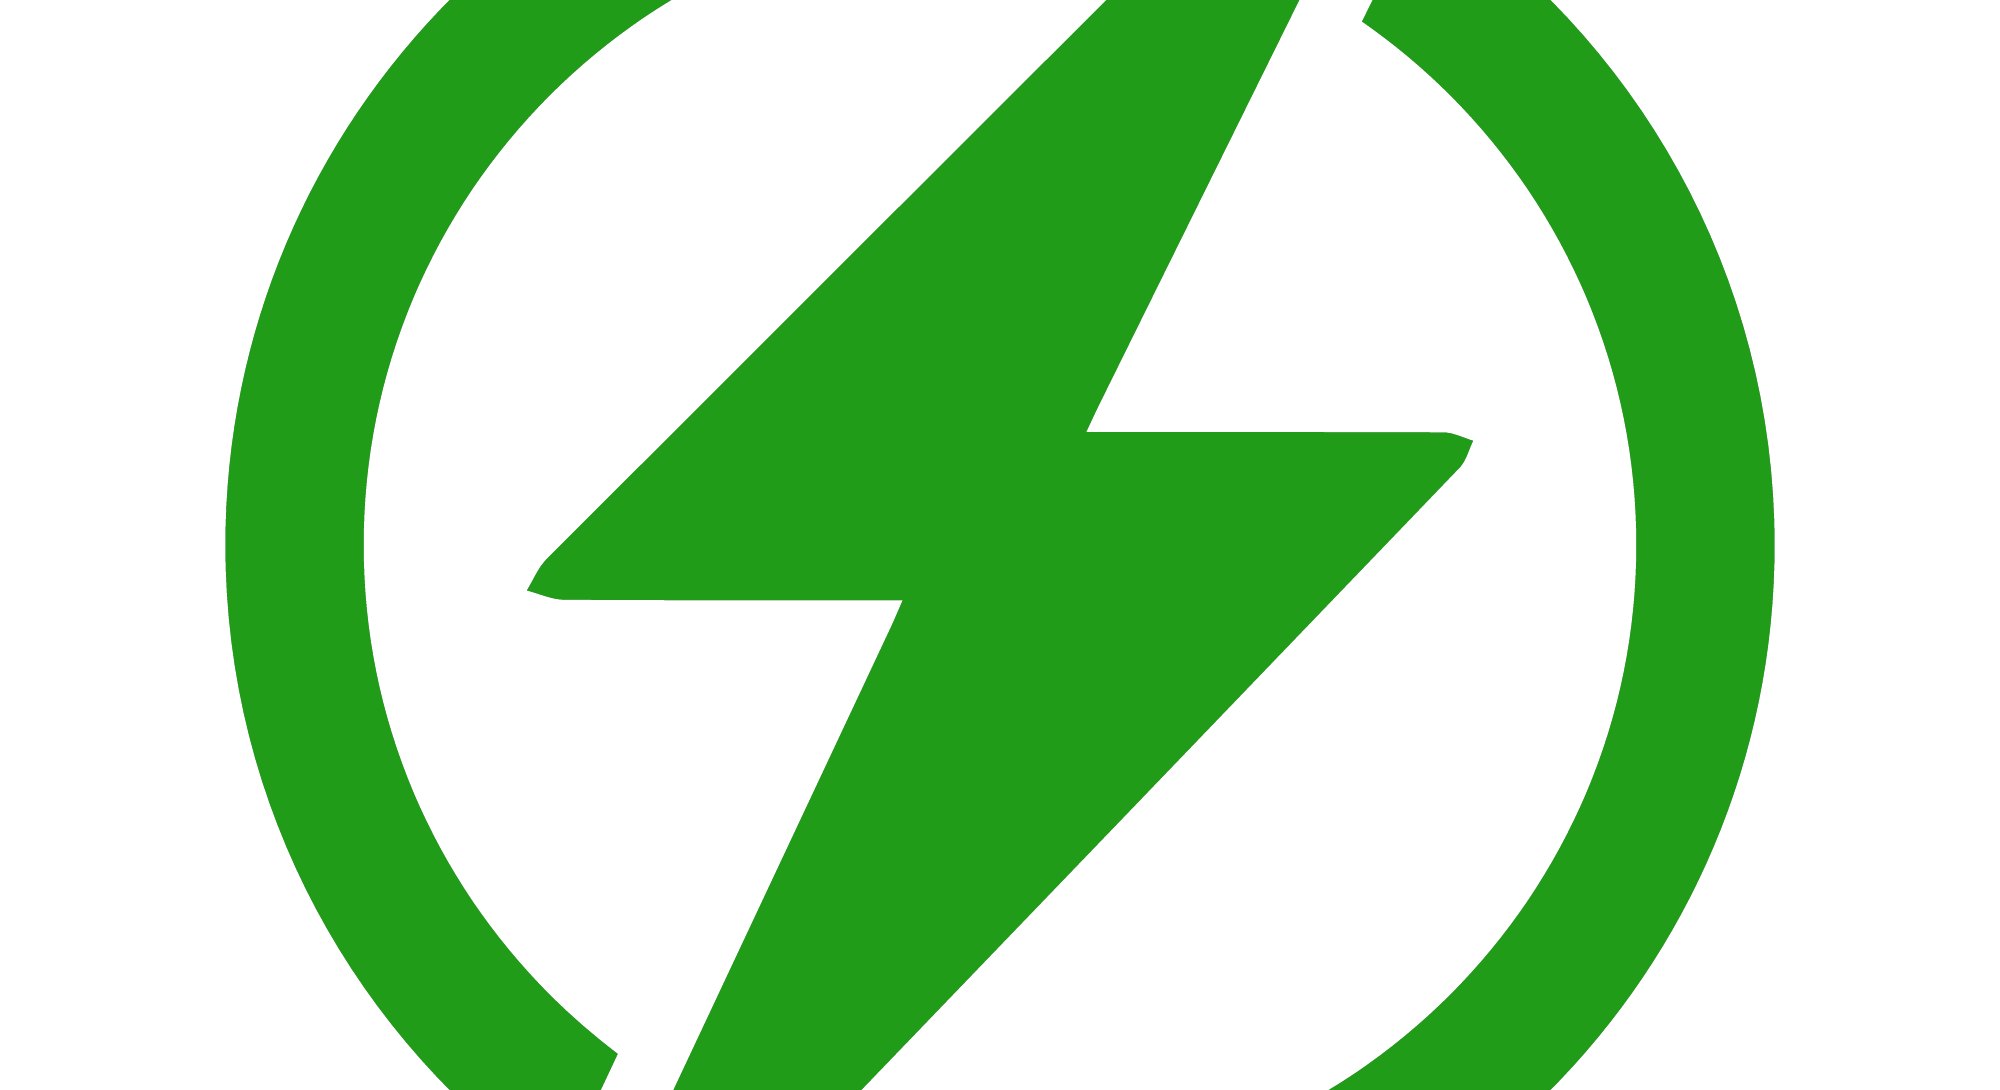 Power Icon, Lightning Power Icon